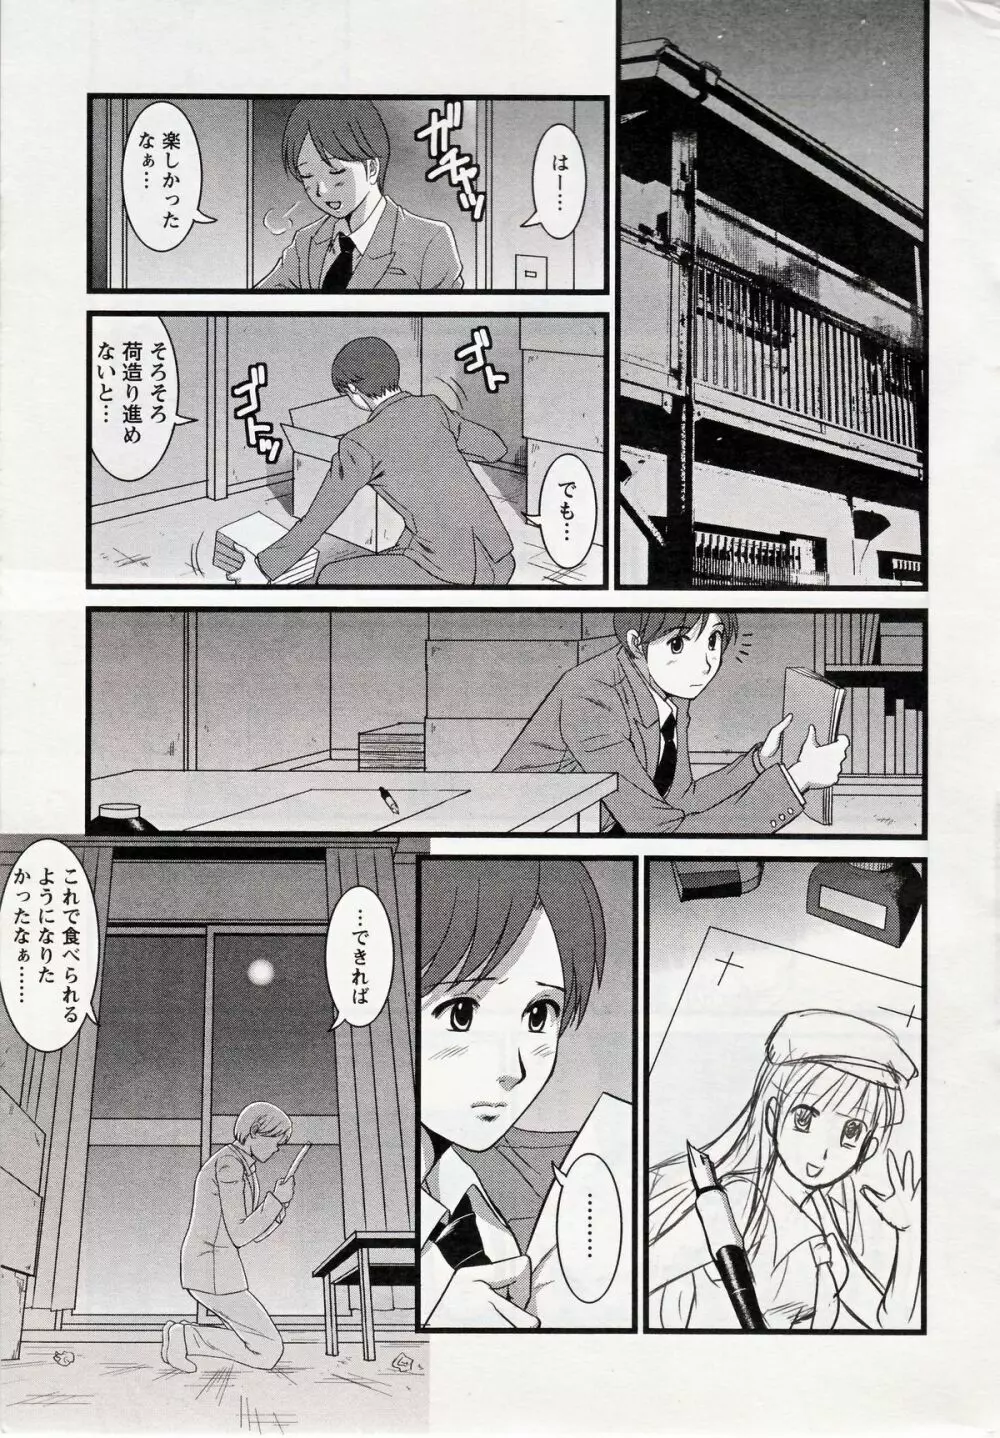 Haken no Muuko-san 14 11ページ